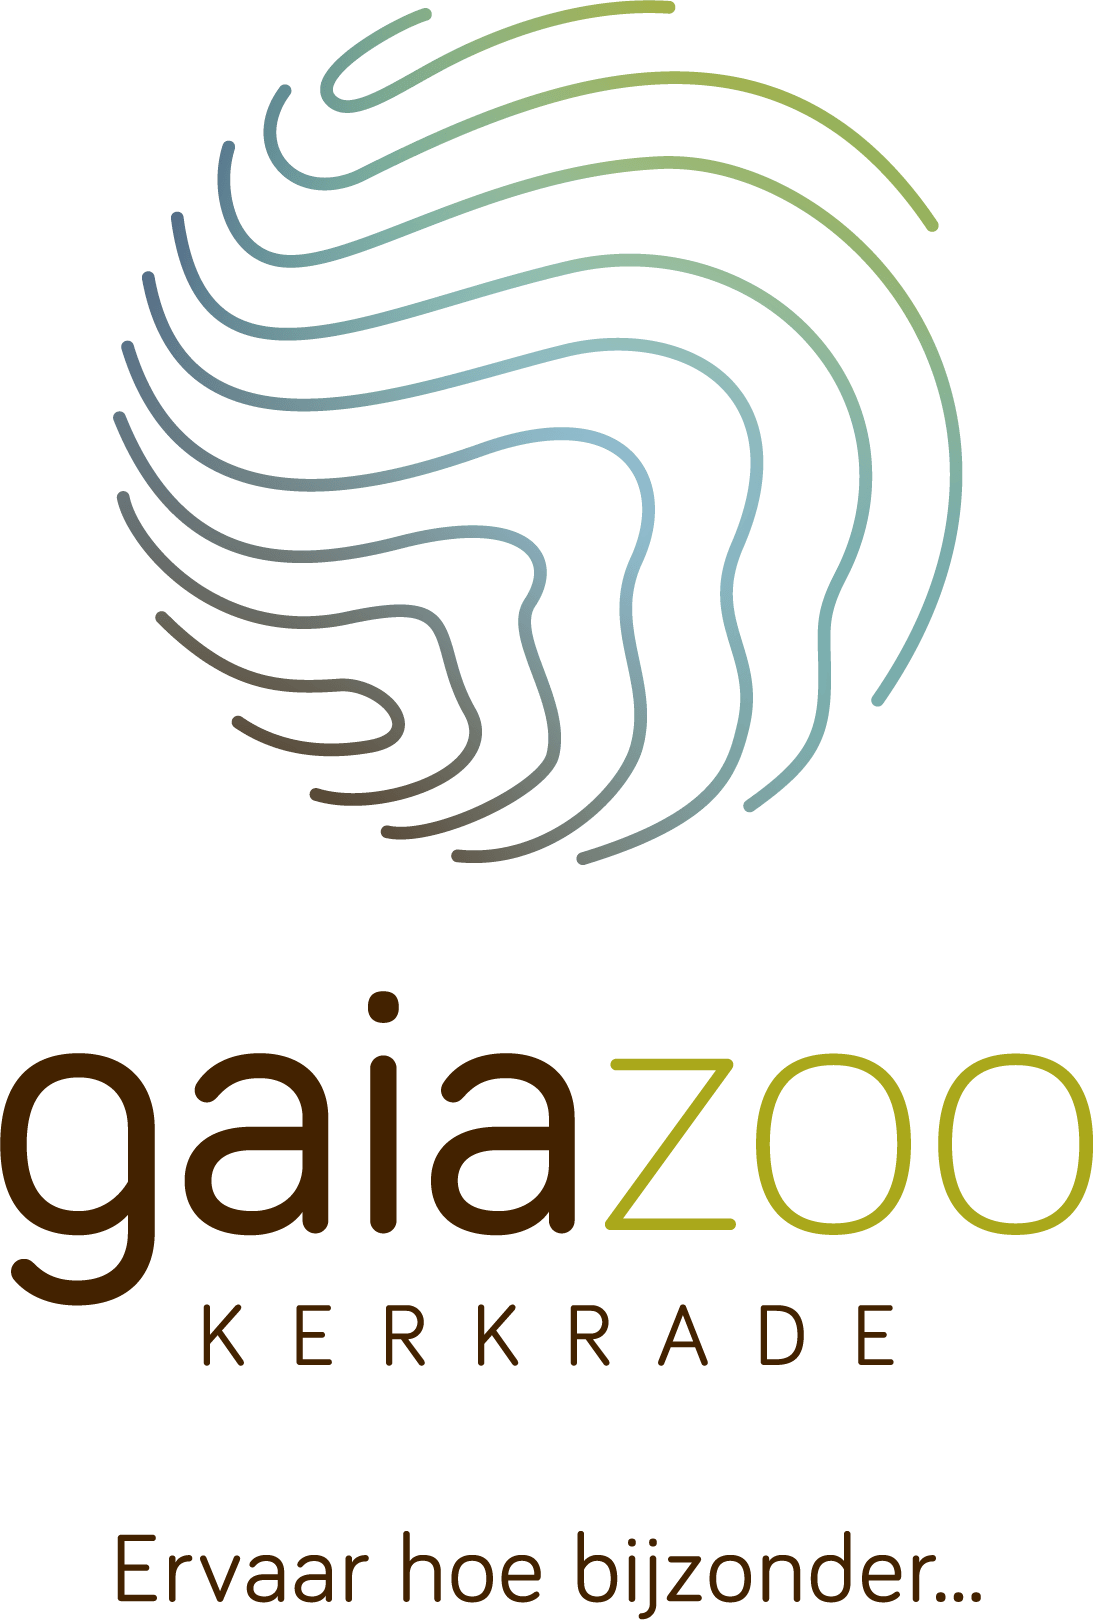 gaiazoo_logo.png